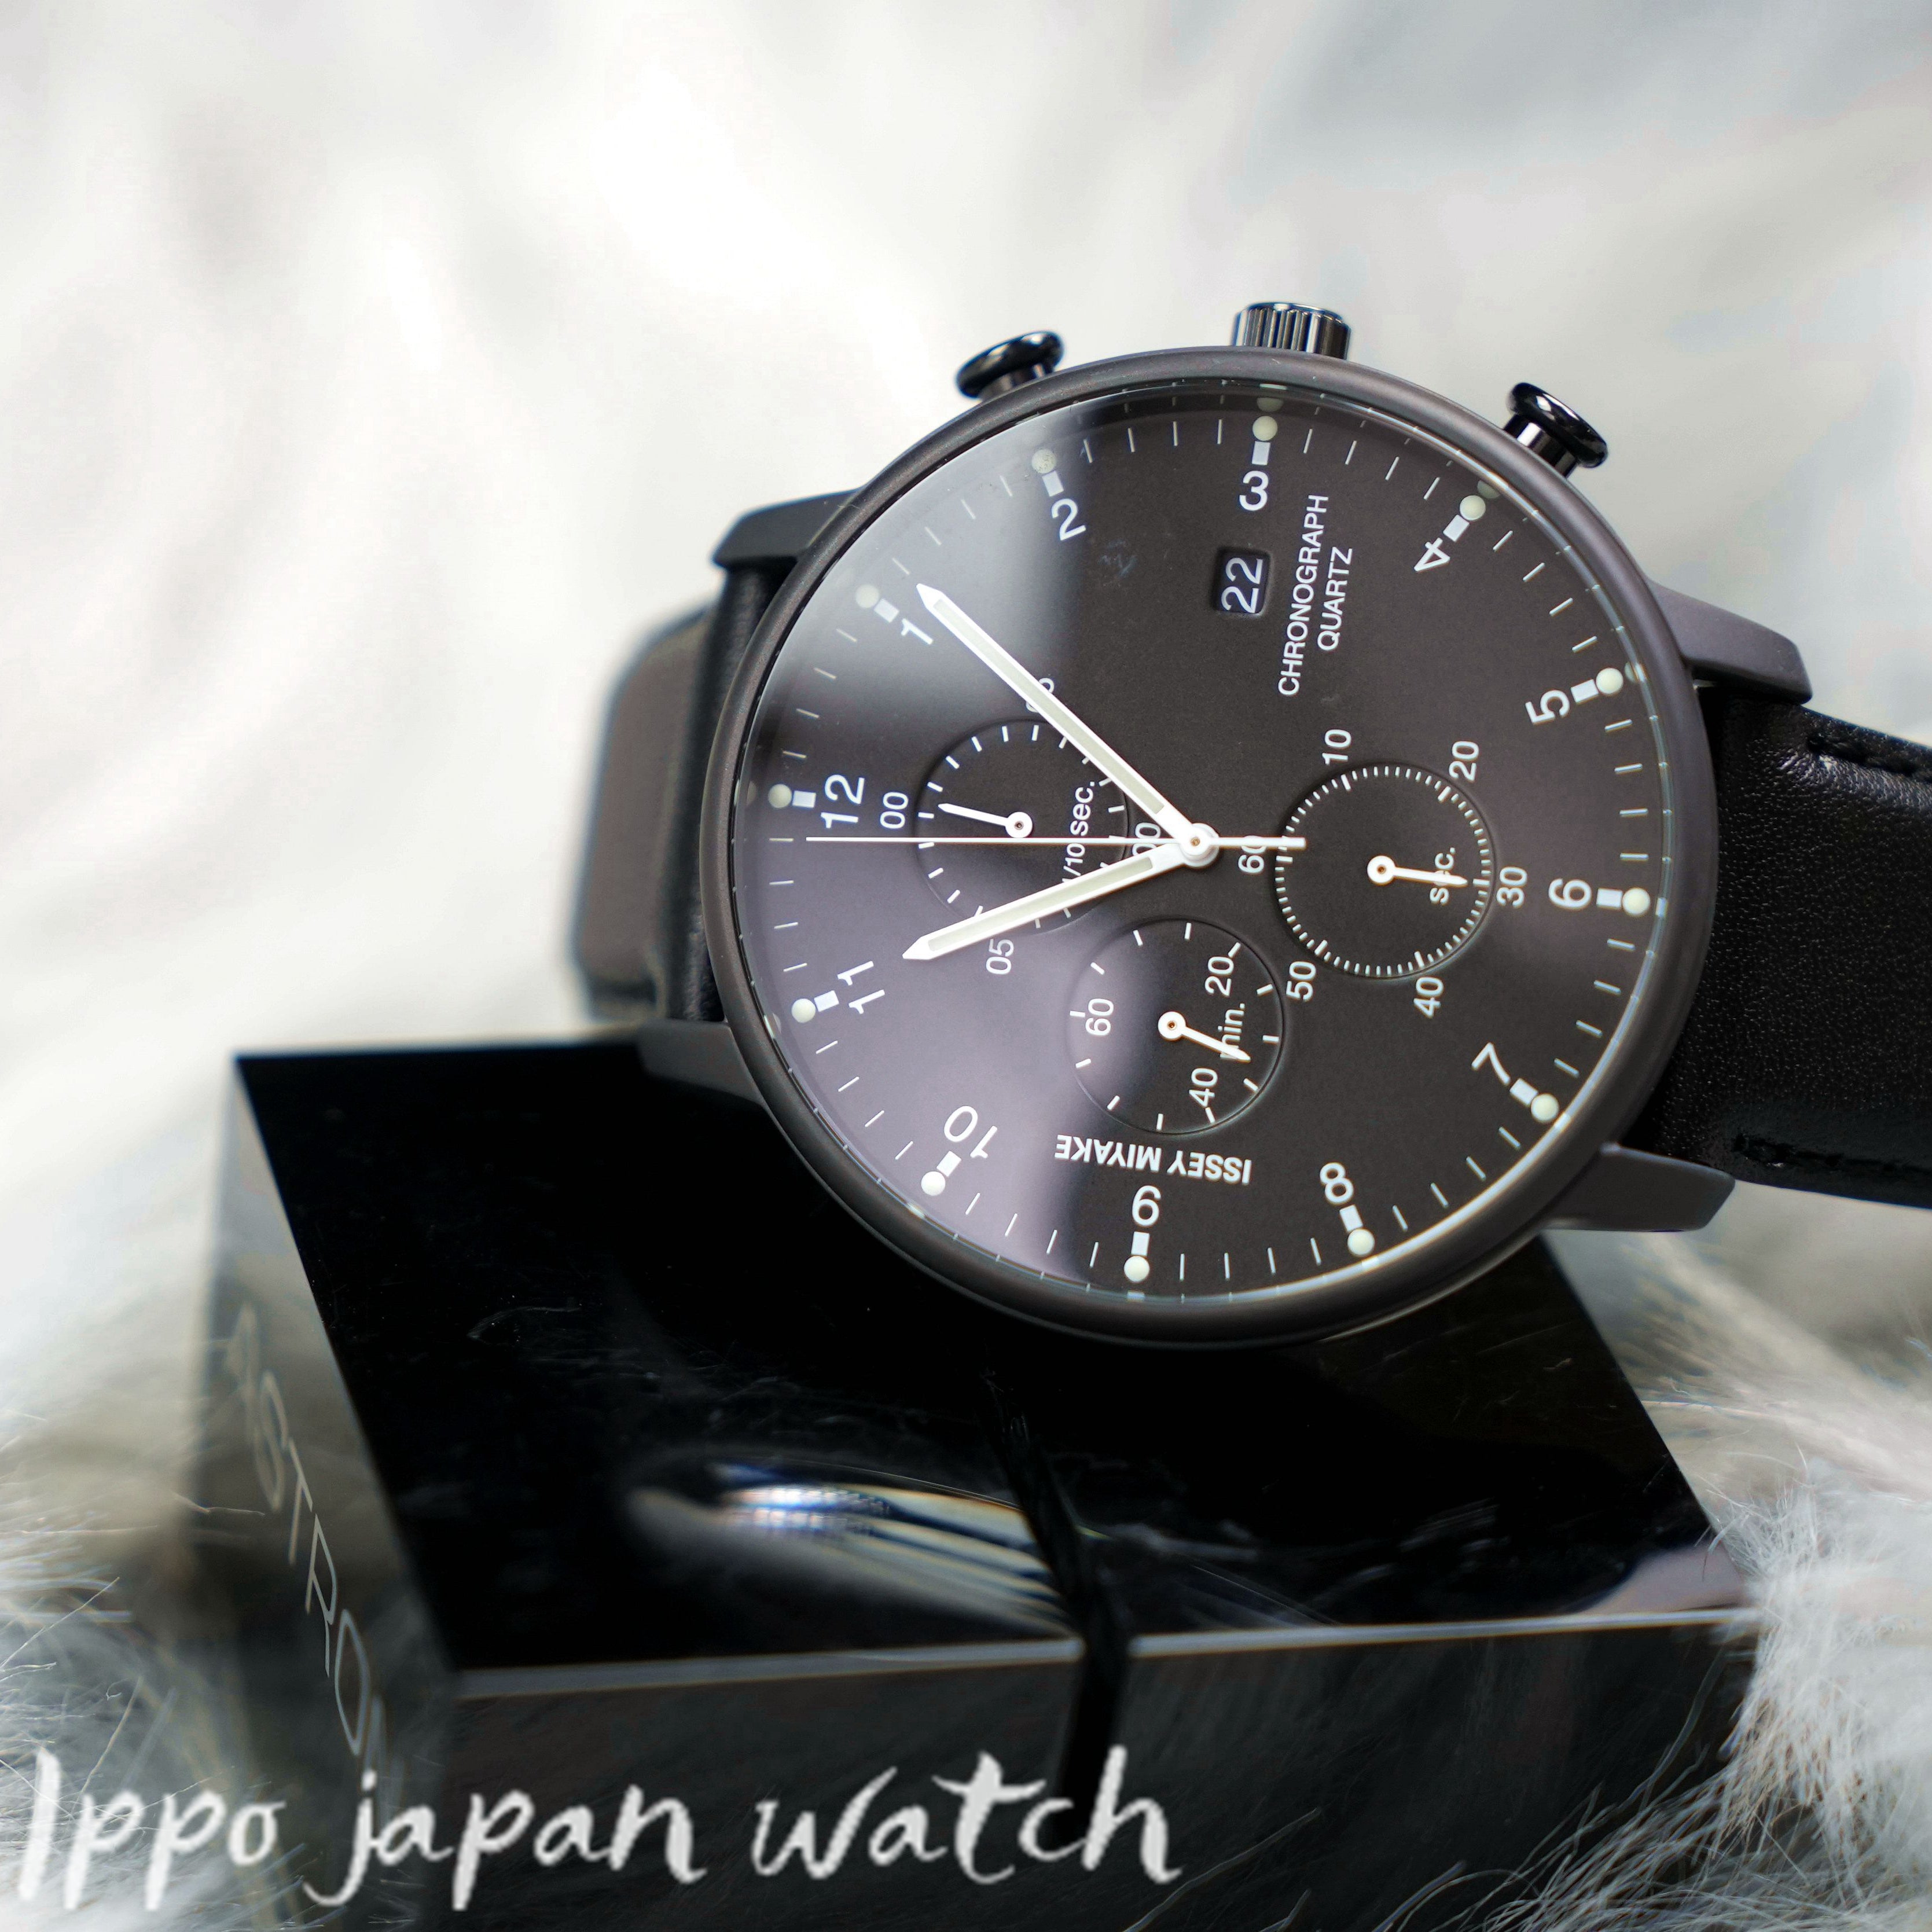 ISSEY MIYAKE C NYAD007 men's watch manufactured by Seiko - IPPO JAPAN WATCH 